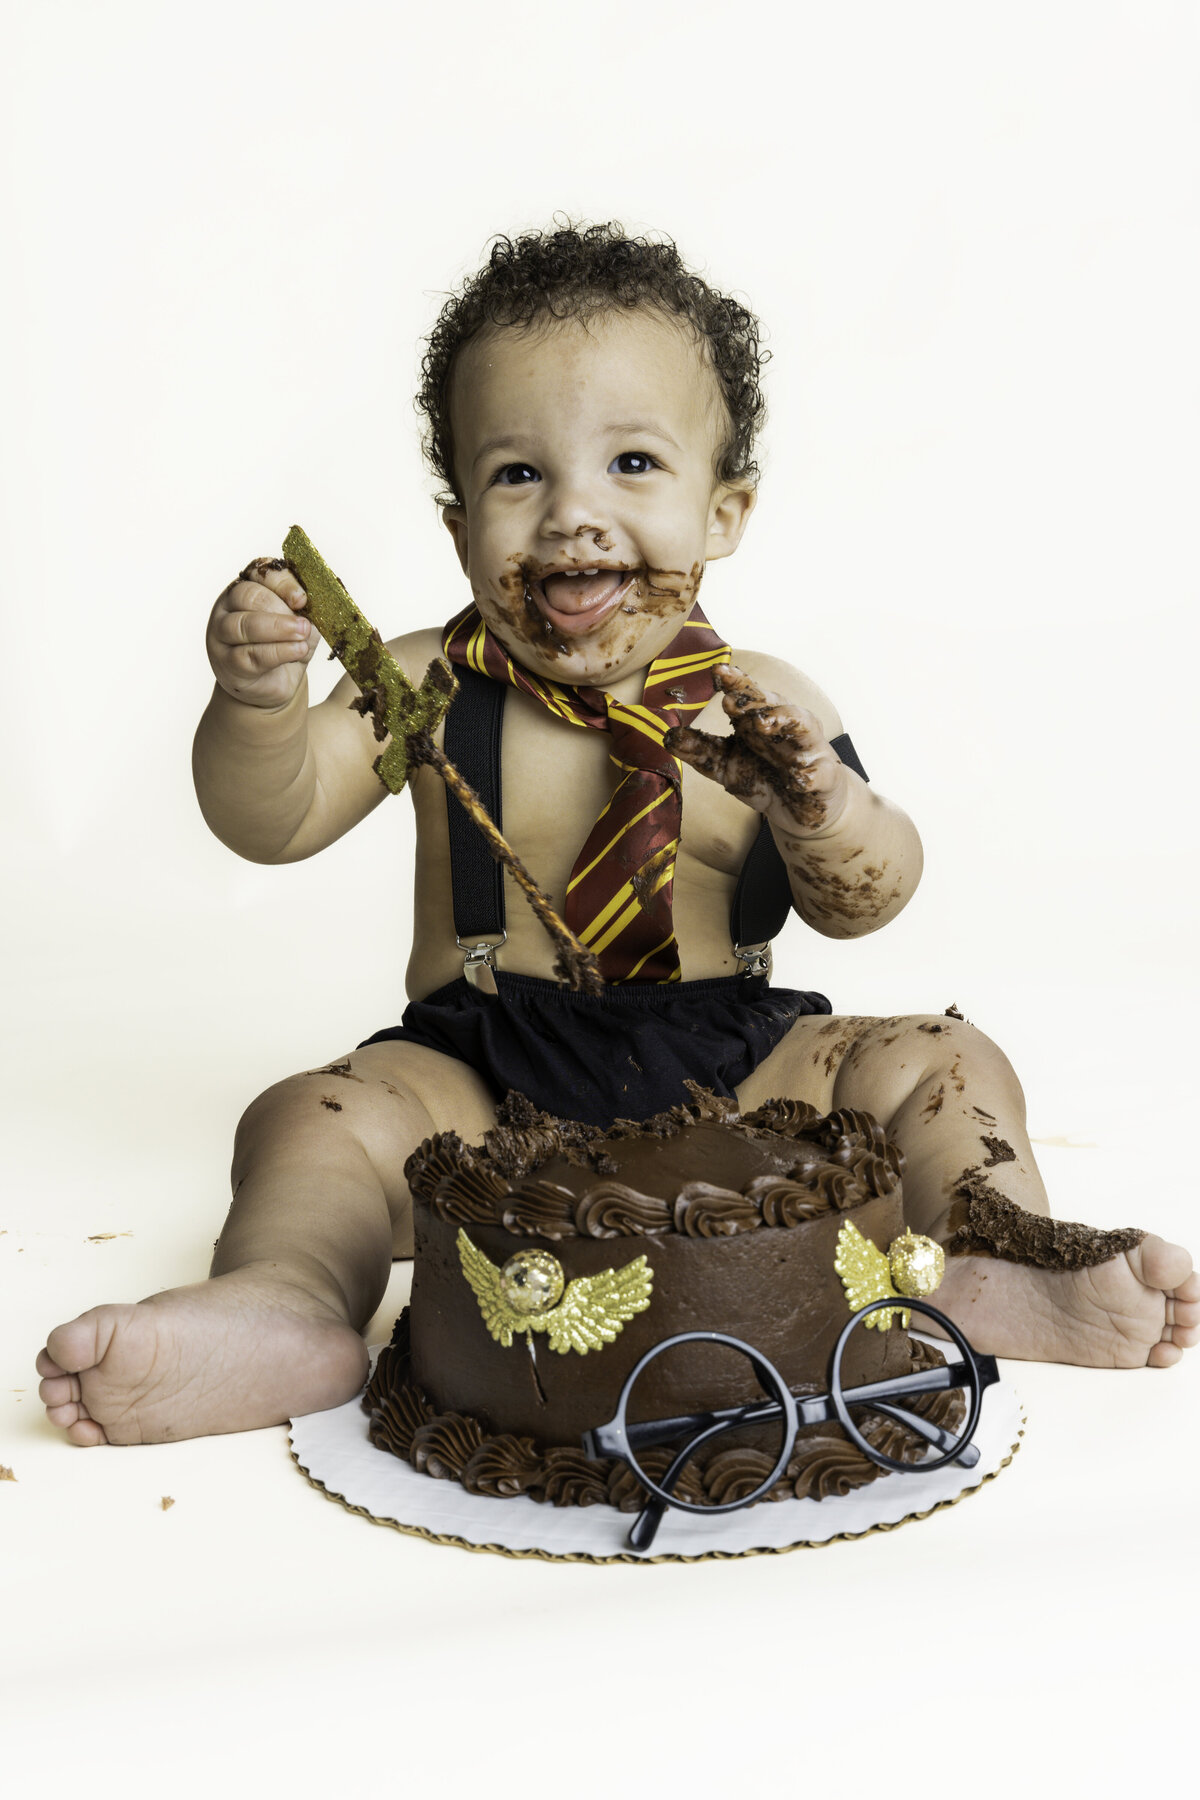 Kiaros-1st-birthday-harry-potter-themed-child-cake-smash-7